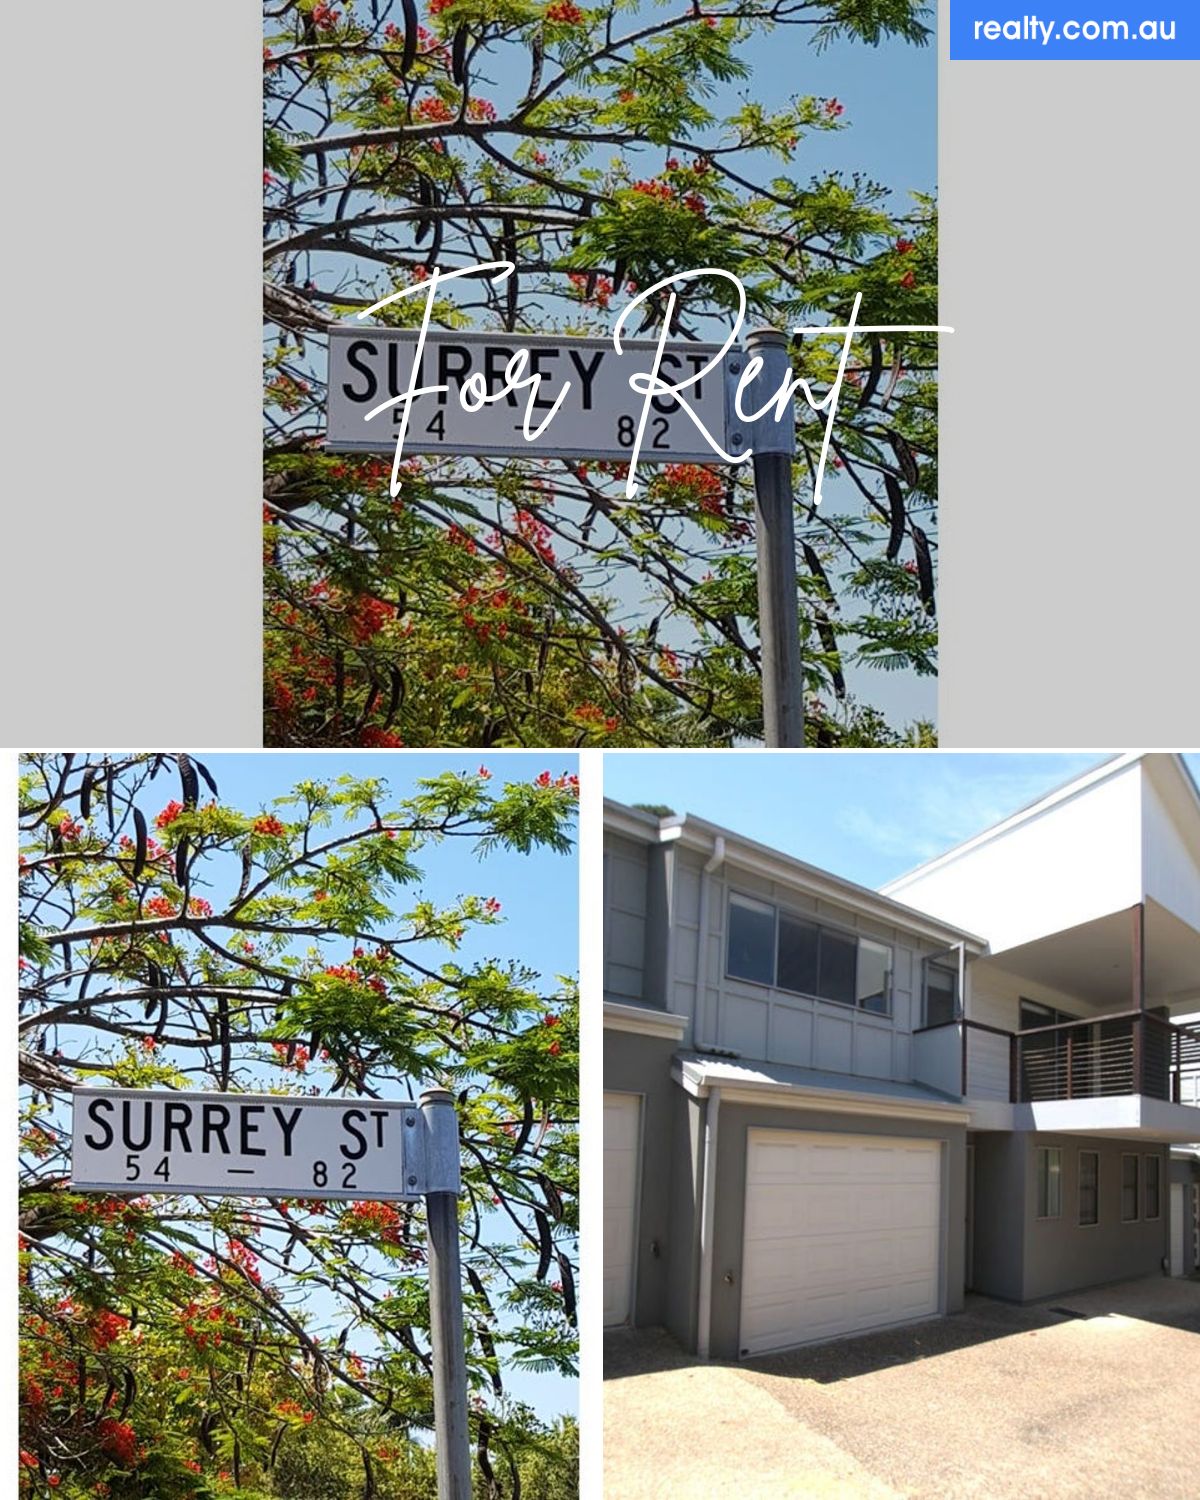 2/54 Surrey Street, Nundah, QLD 4012 | Realty.com.au